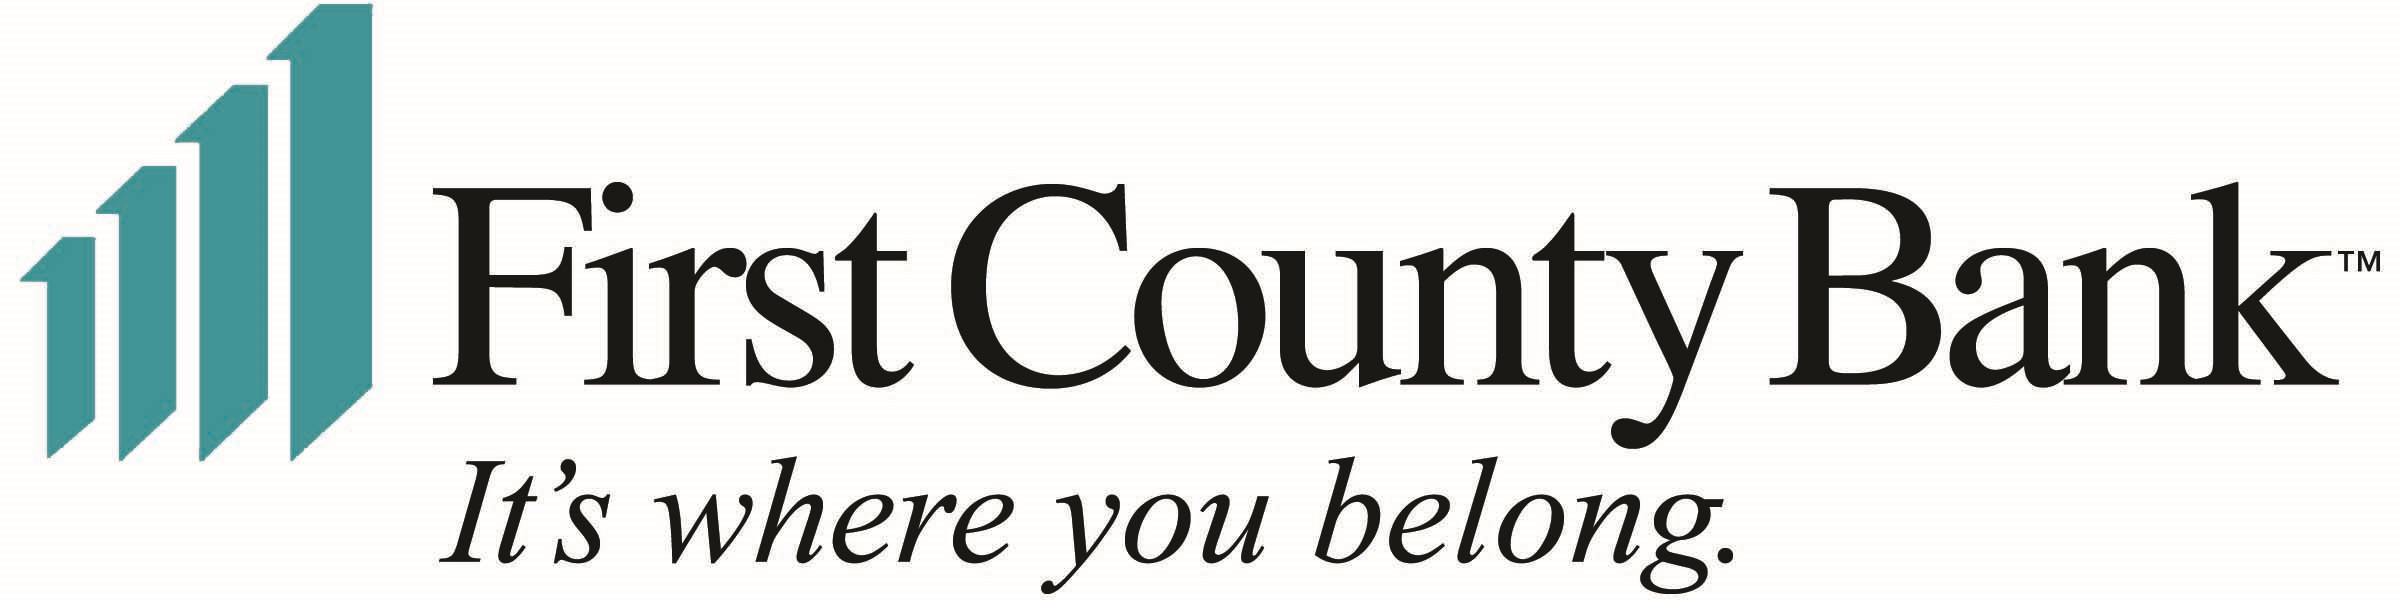 First County Bank Company Logo